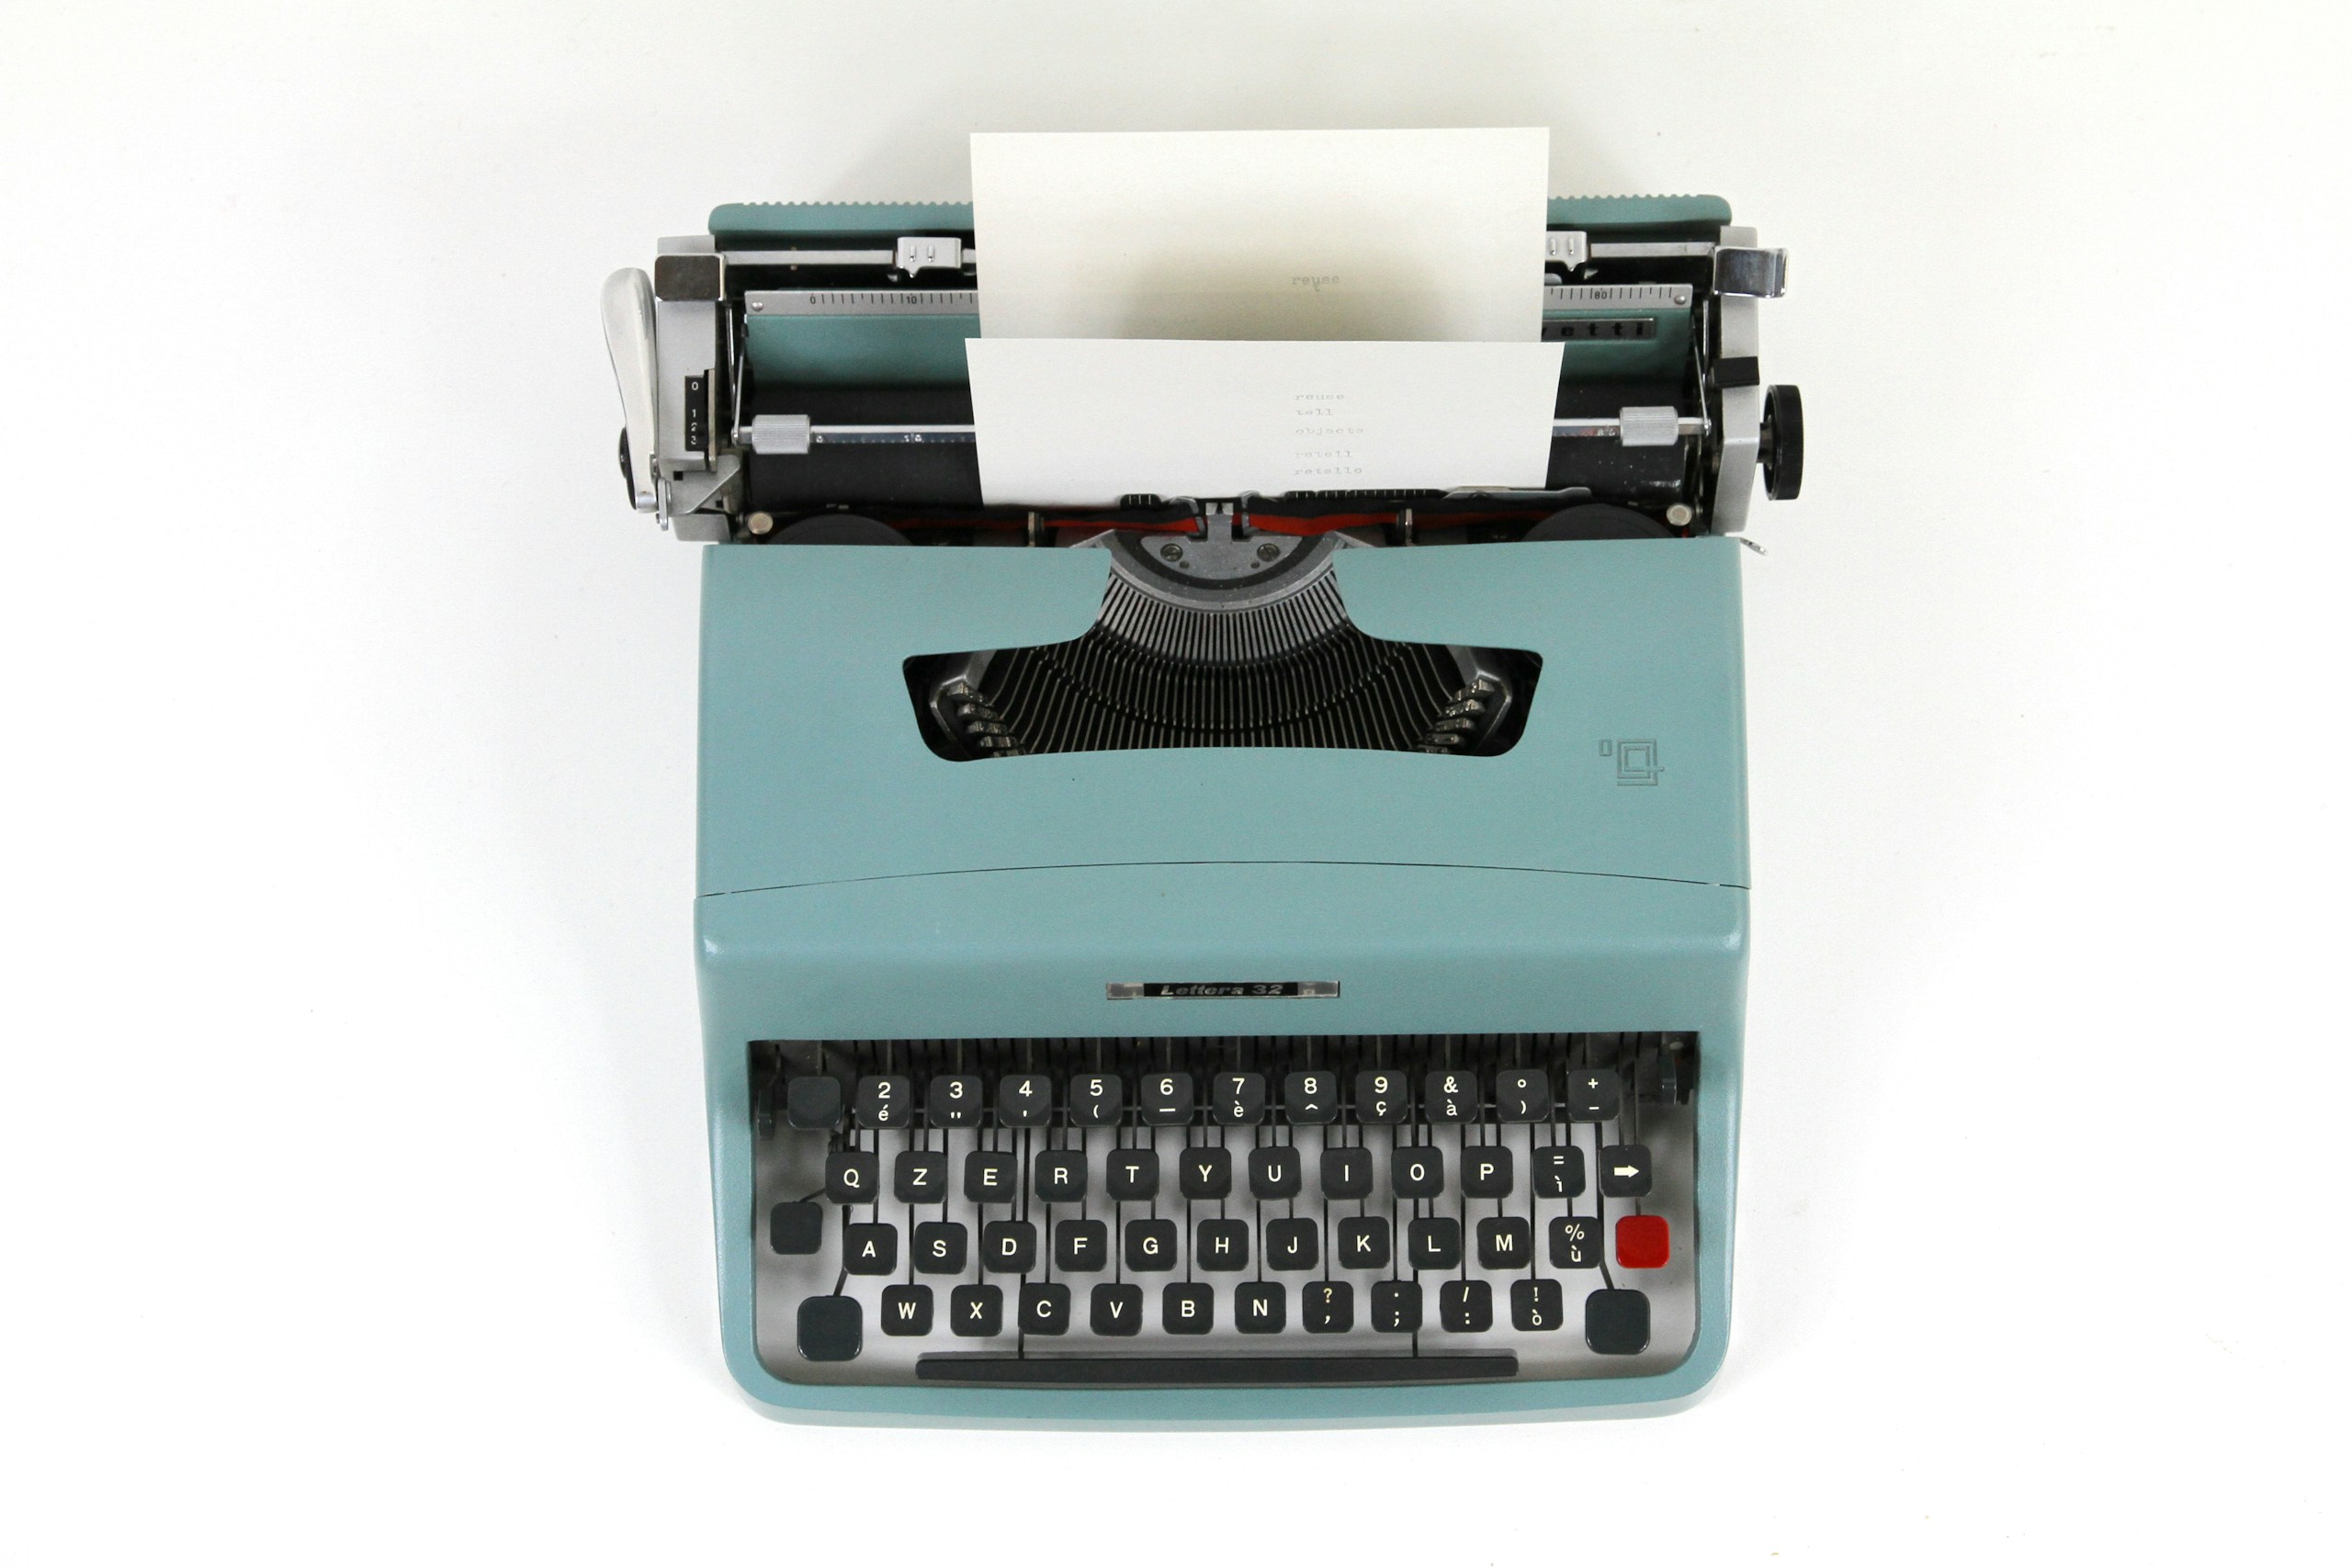 teal and black typewriter machine creativity articles